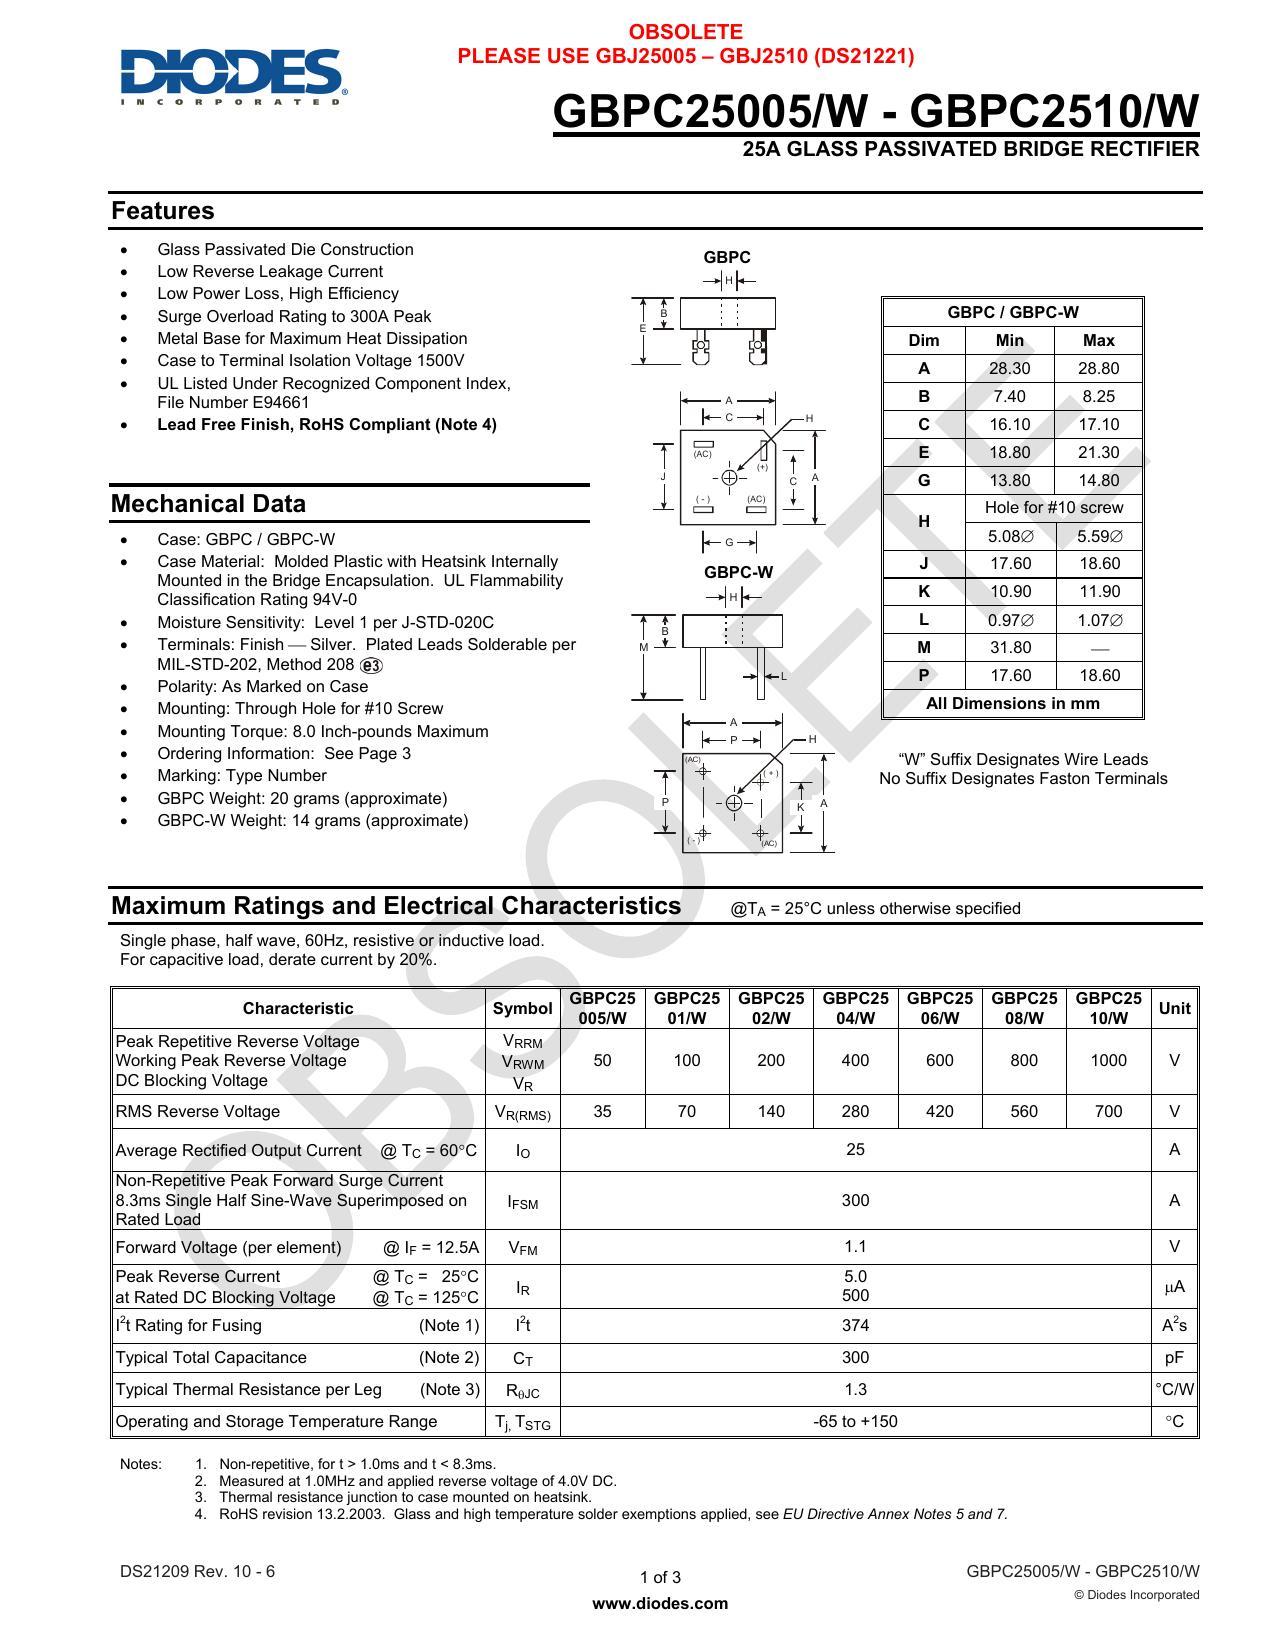 25a-glass-passivated-bridge-rectifier-datasheet.pdf